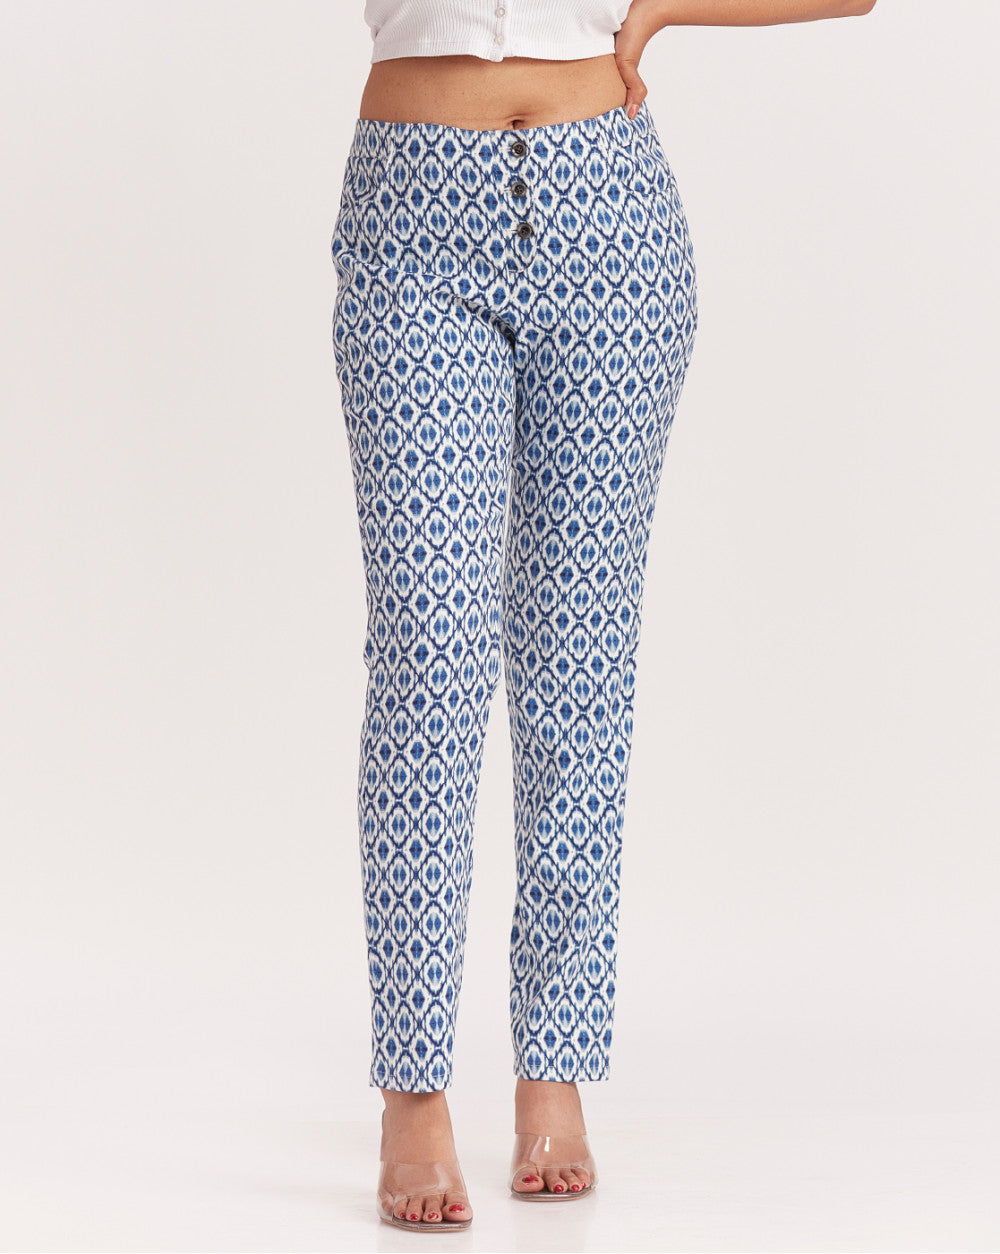 Slim Fit Geometric Print Pants - Blue Ikat Print